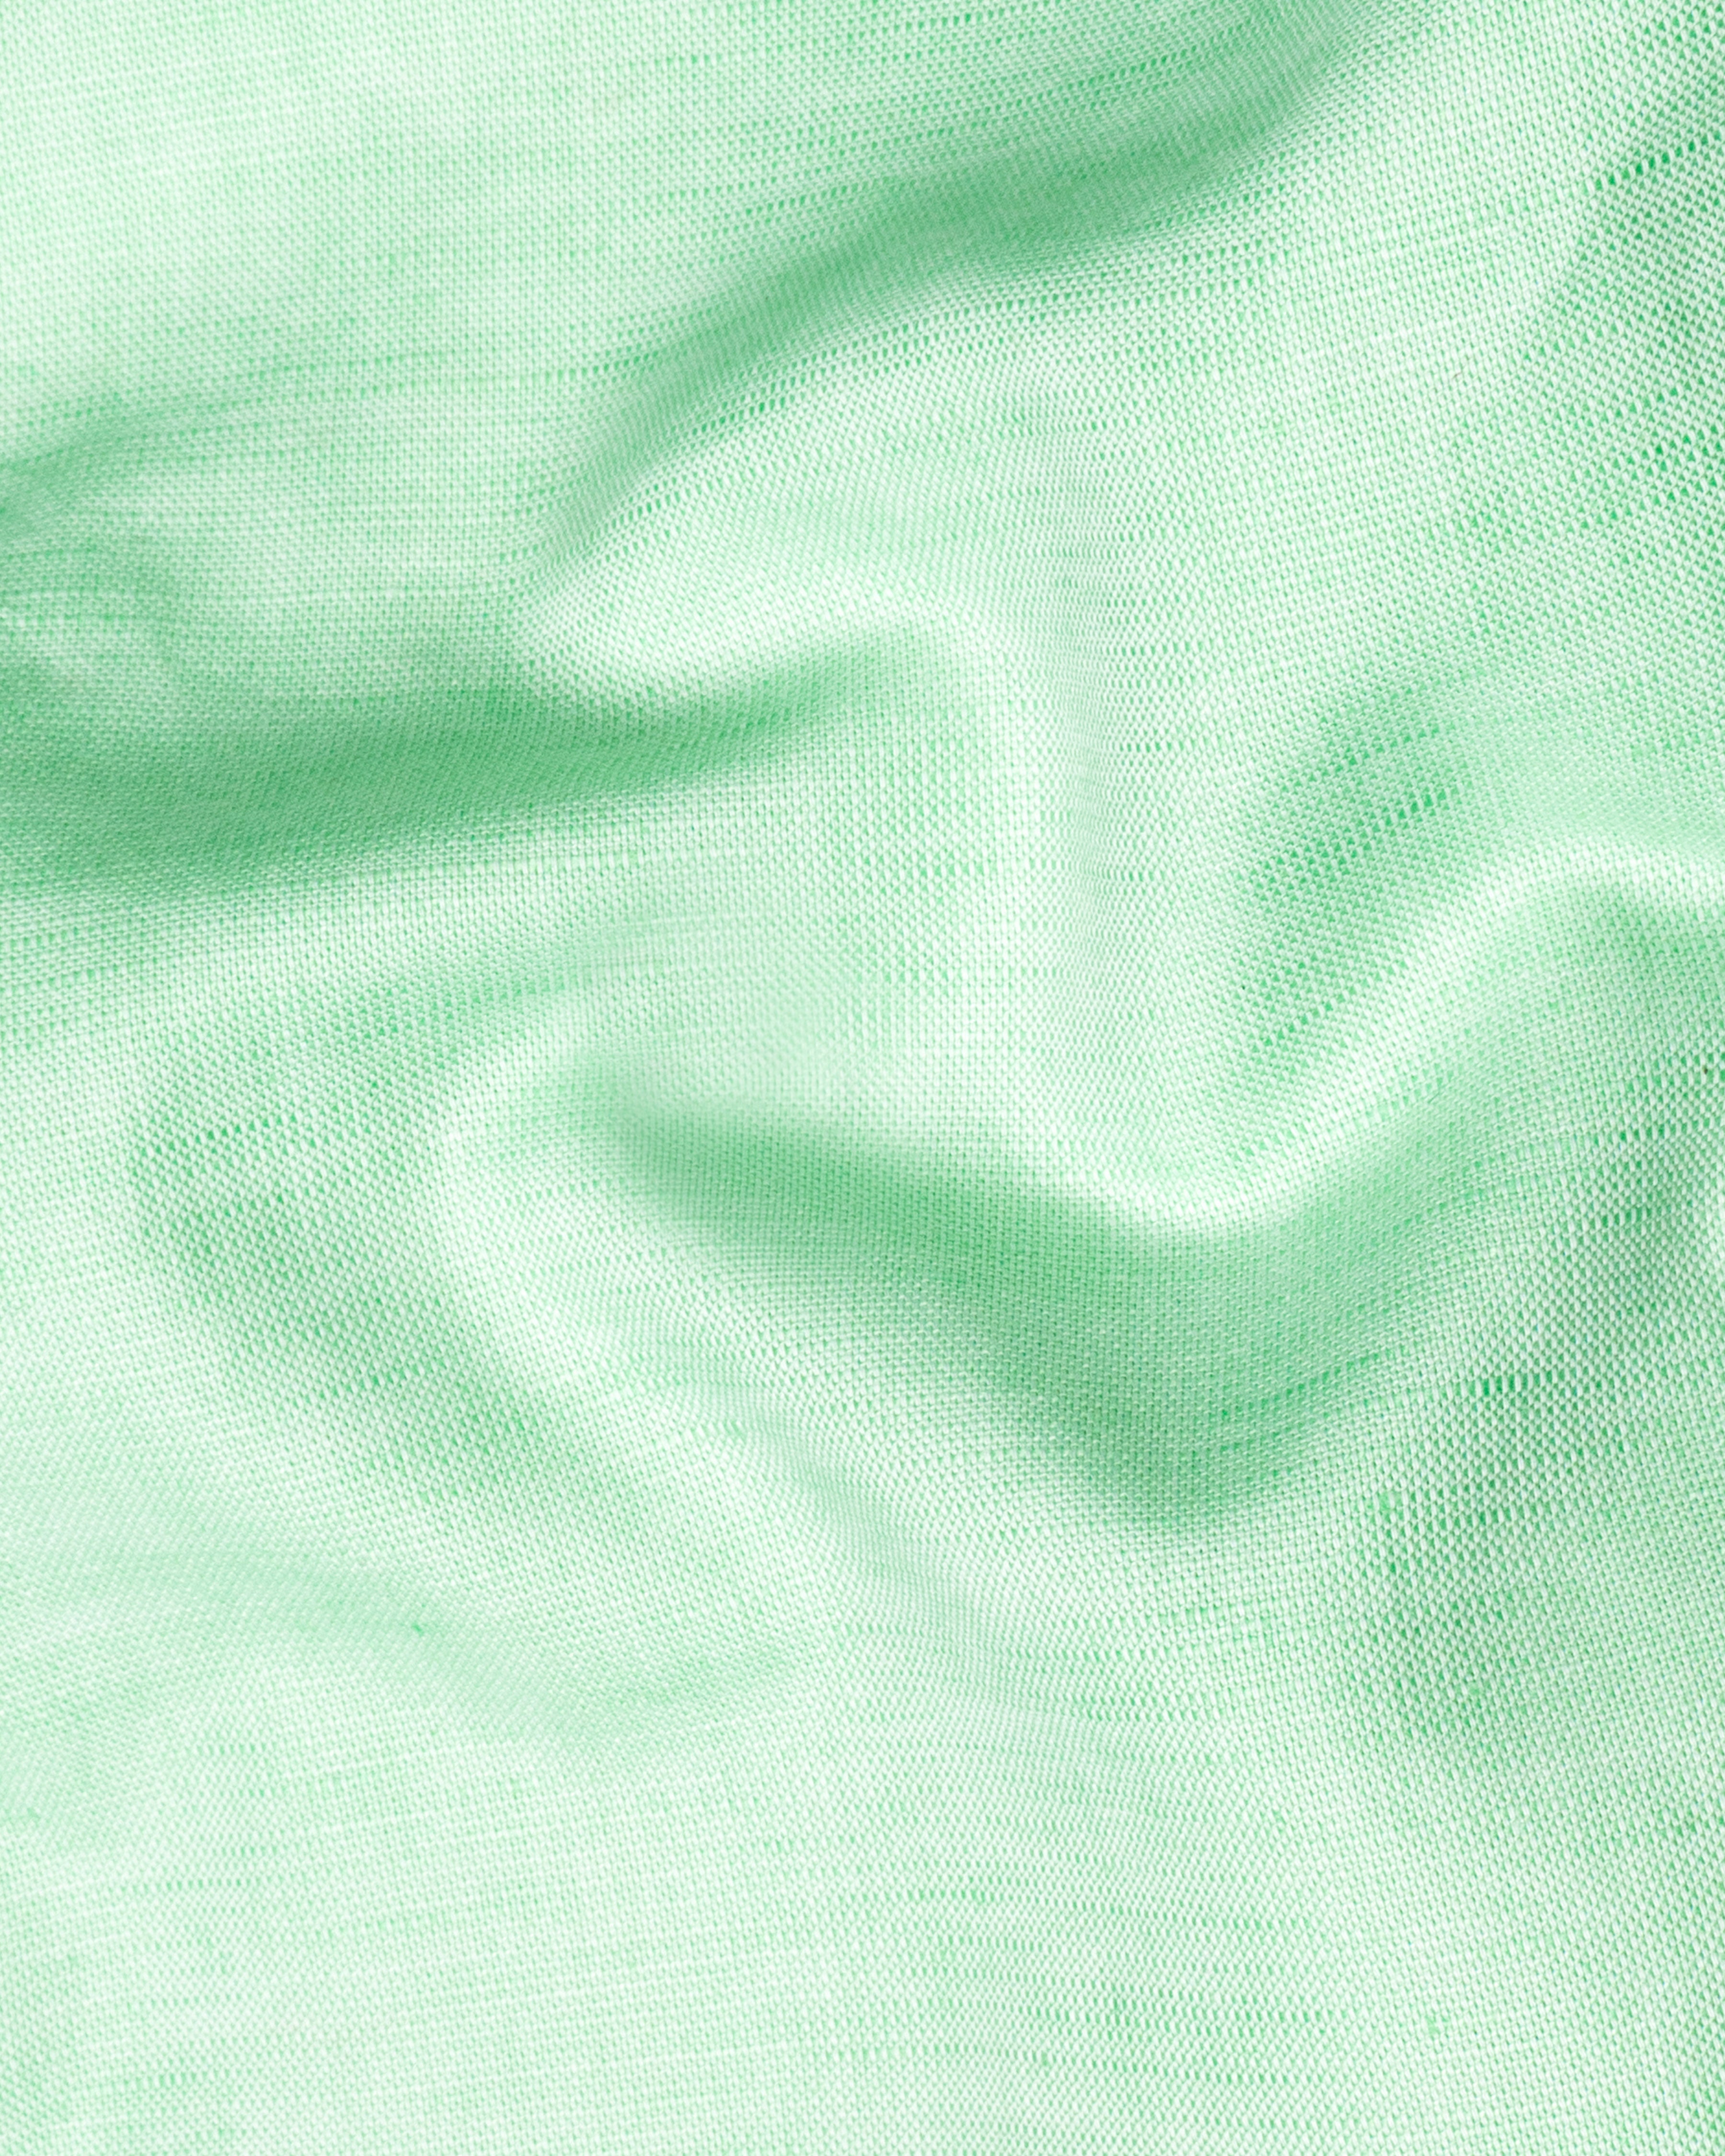 Geyser Green Embroidered Royal Oxford Shirt 8178-CA-E048-38, 8178-CA-E048-H-38, 8178-CA-E048-39, 8178-CA-E048-H-39, 8178-CA-E048-40, 8178-CA-E048-H-40, 8178-CA-E048-42, 8178-CA-E048-H-42, 8178-CA-E048-44, 8178-CA-E048-H-44, 8178-CA-E048-46, 8178-CA-E048-H-46, 8178-CA-E048-48, 8178-CA-E048-H-48, 8178-CA-E048-50, 8178-CA-E048-H-50, 8178-CA-E048-52, 8178-CA-E048-H-52